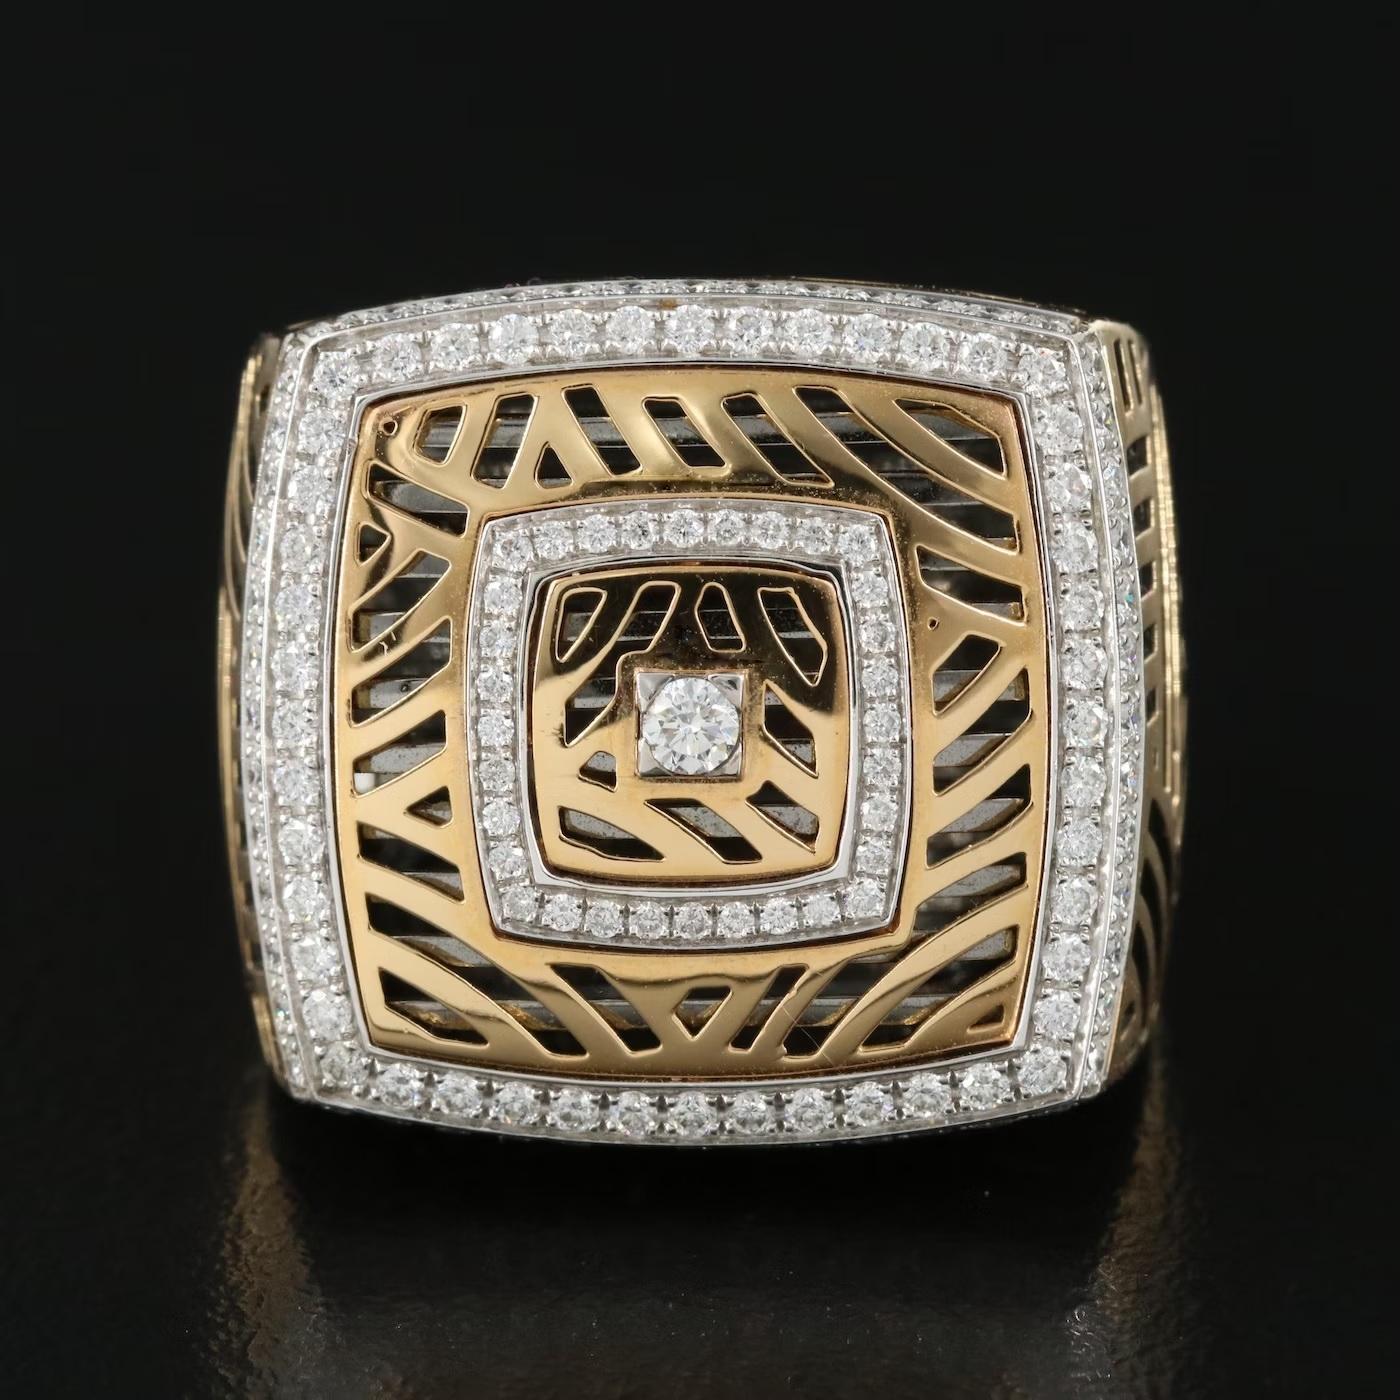 Giorgio Visconti - Venice ITALY designer ring, stamped and hallmarked 

Hallmarks: 750 ☆2149 AL

New with Tags, Price on Tag $14500

Amazing design, Geometric frame modernist design  

1.02 CWT Natural Diamond, White sparkly diamond, F-G